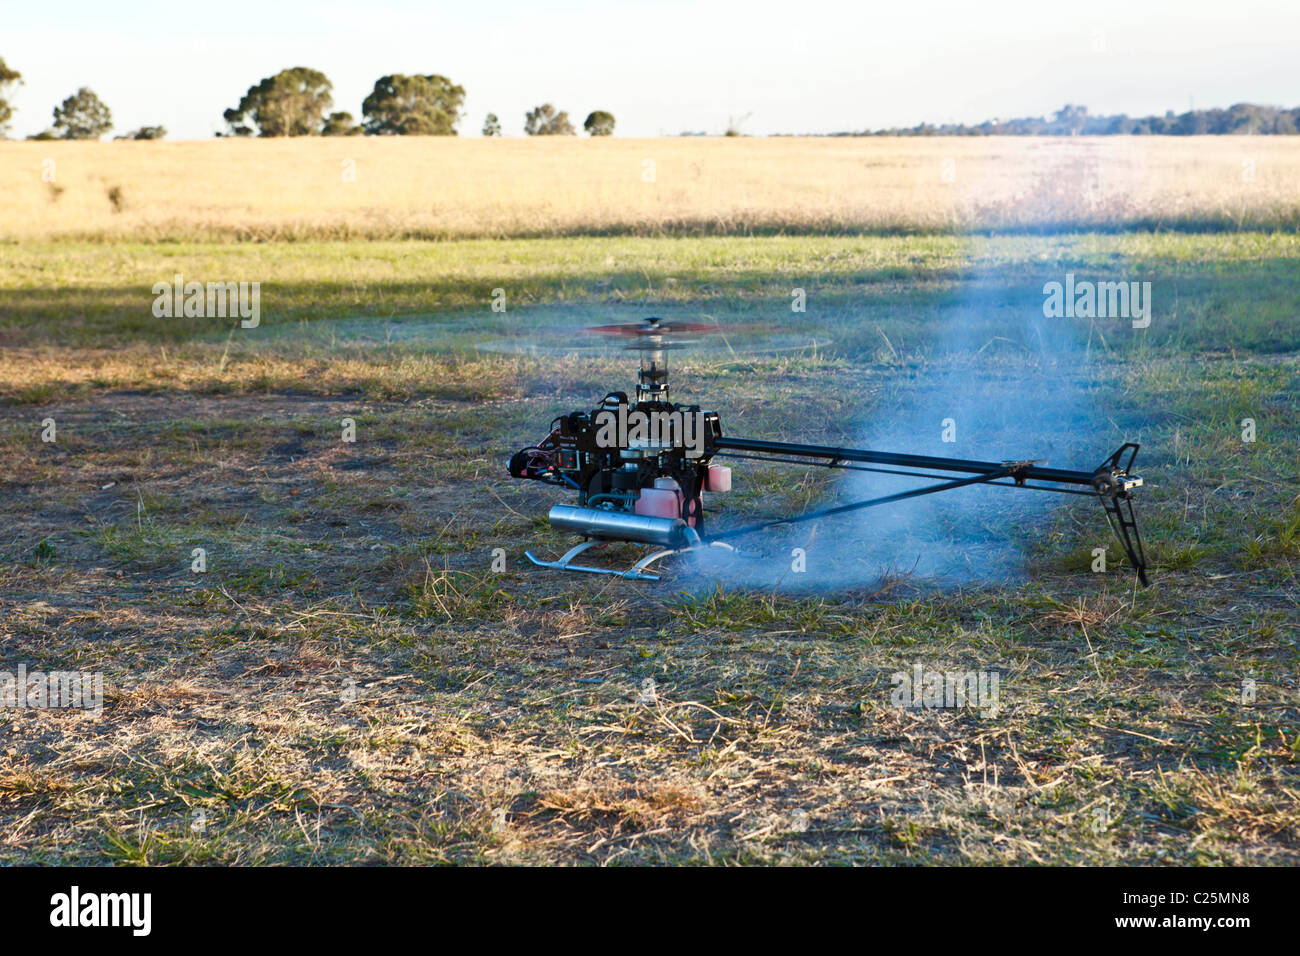 Un modelo de helicóptero controlado por radio se prepara para despegar Foto de stock